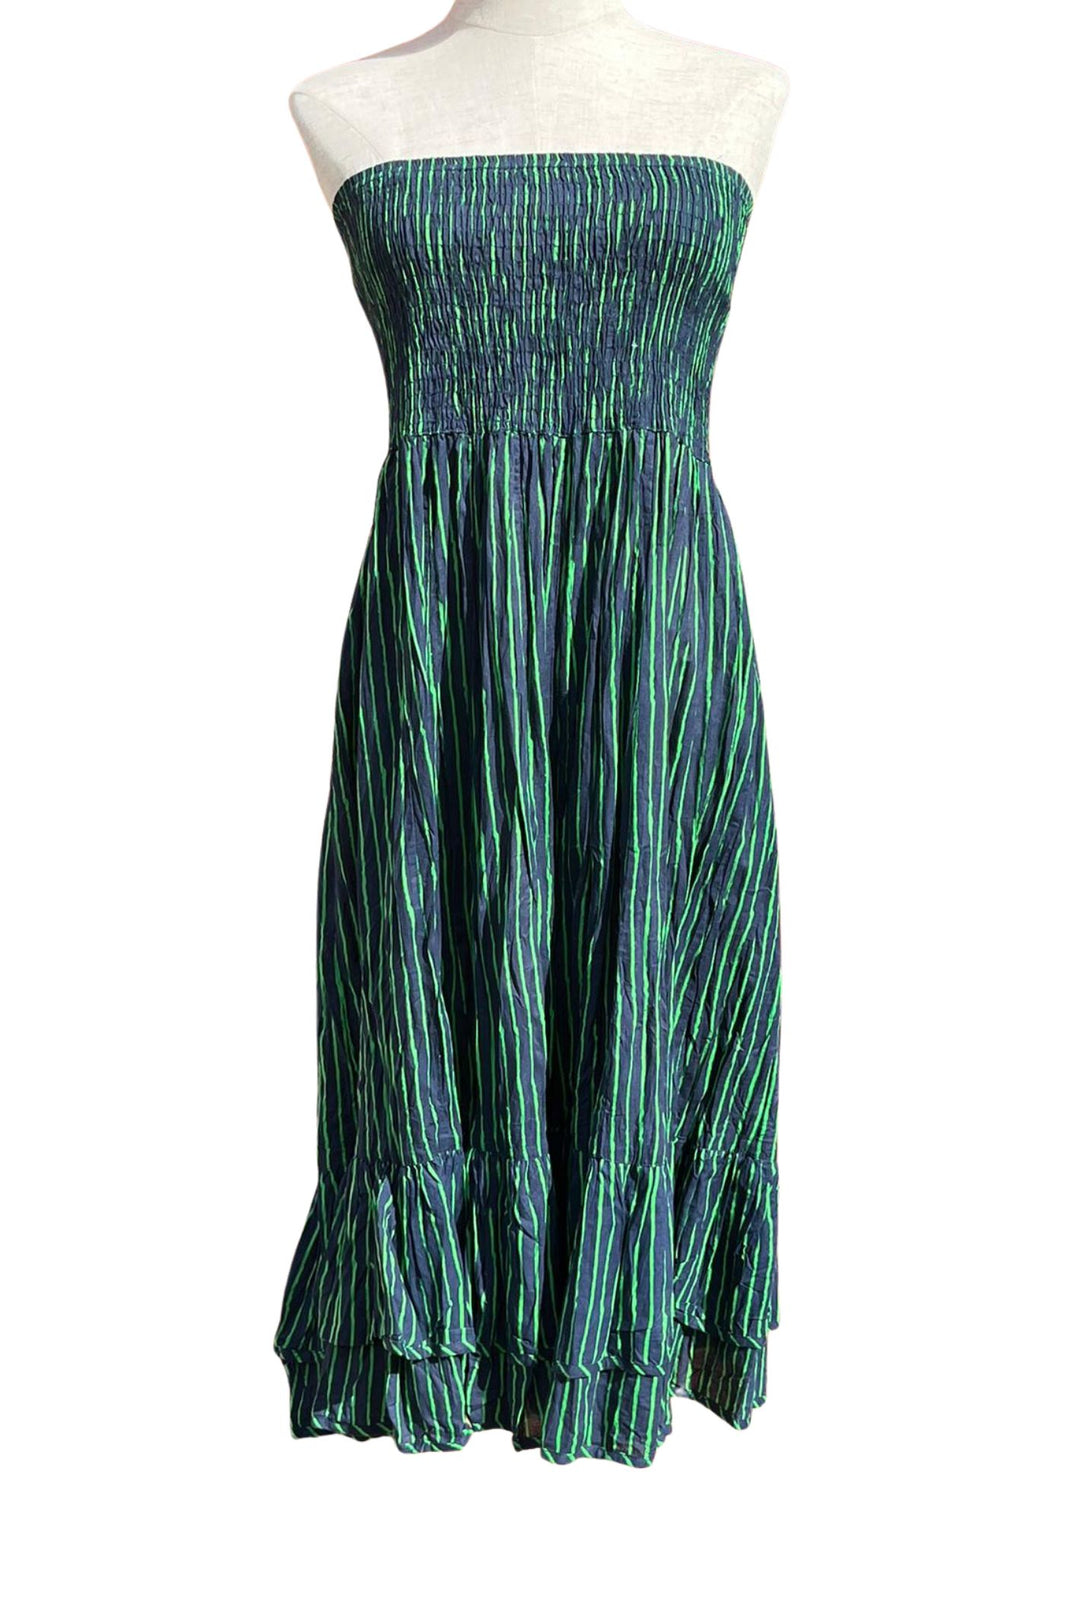 Dress Addict Jaja 317 Navy & Green Stripe 2-in-1 Skirt Dress